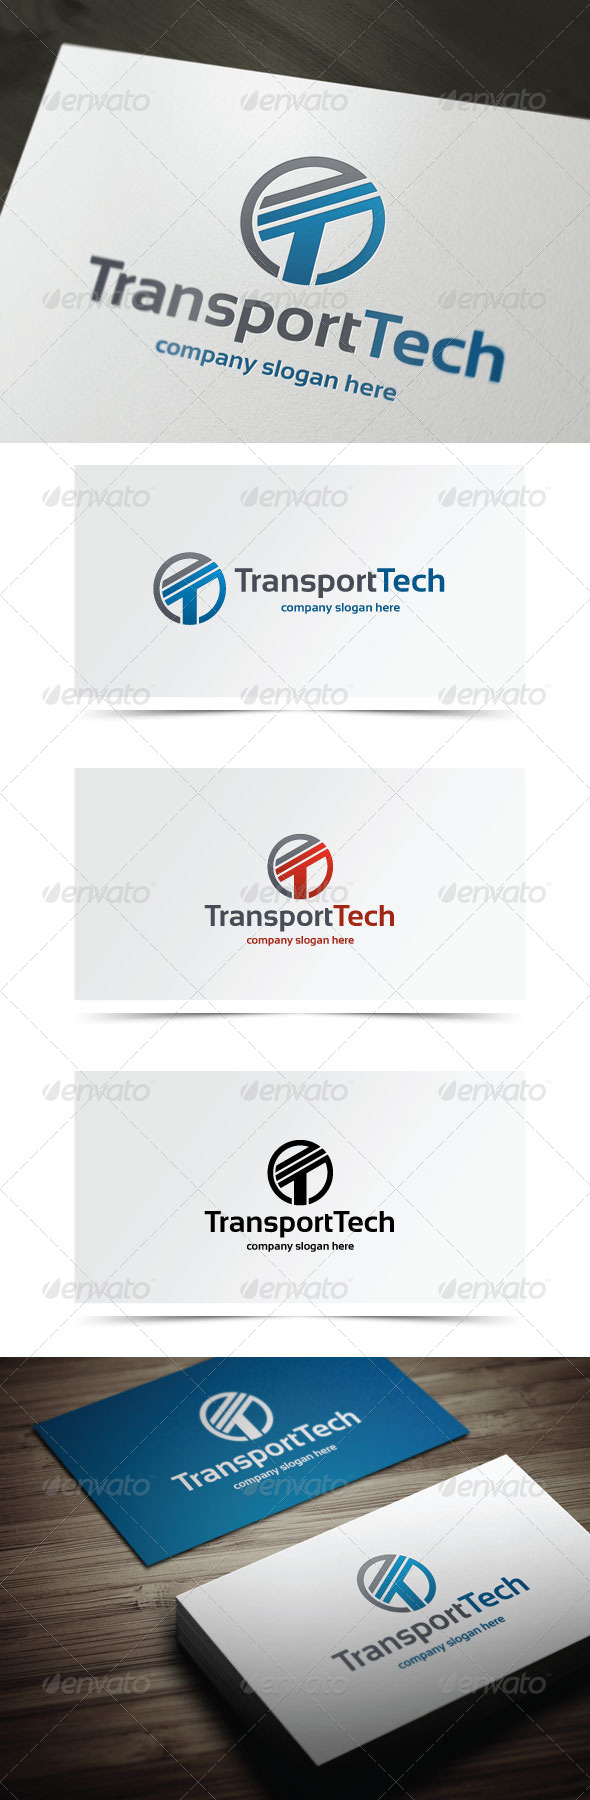 Transport Tech